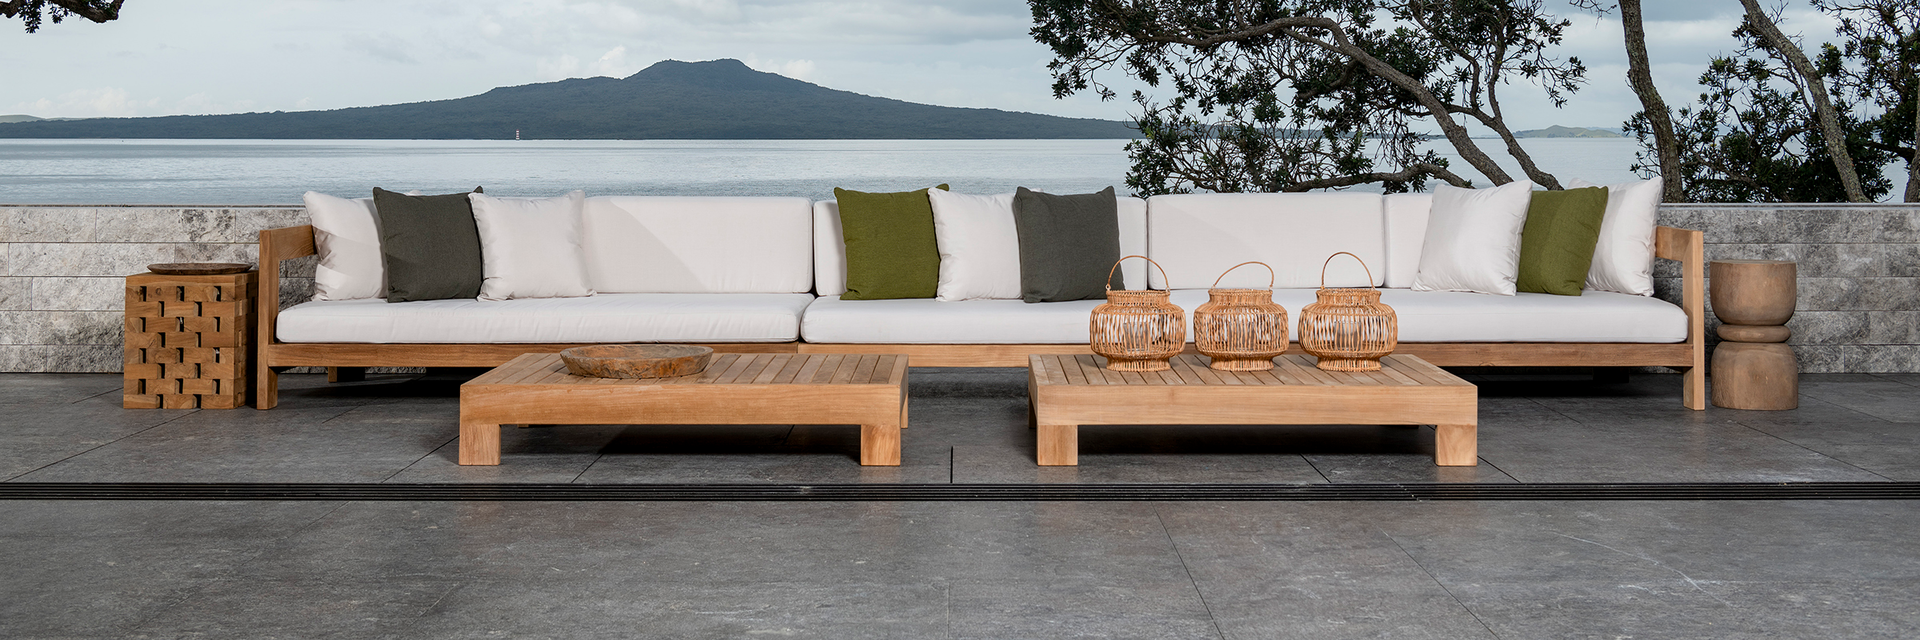 amalfi teak modular furniture collection outside by ocean